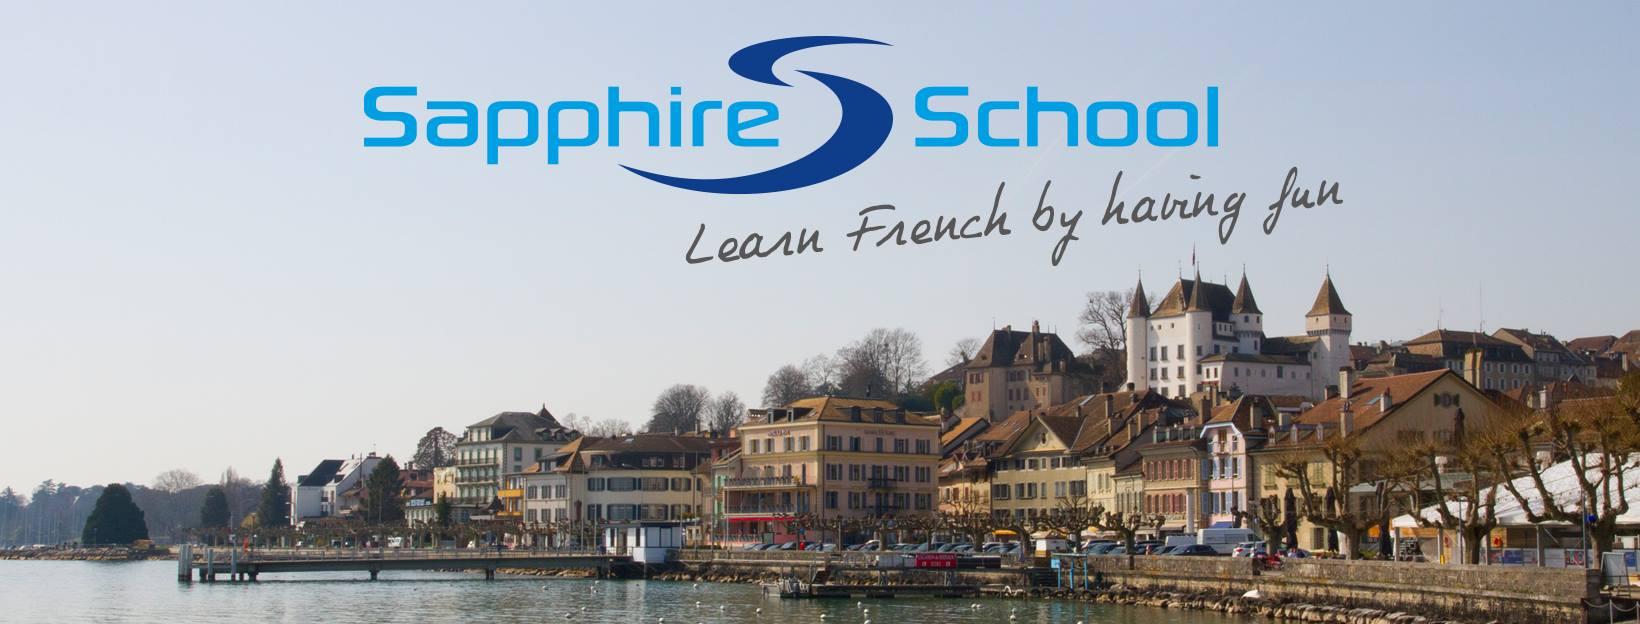 Sapphire School